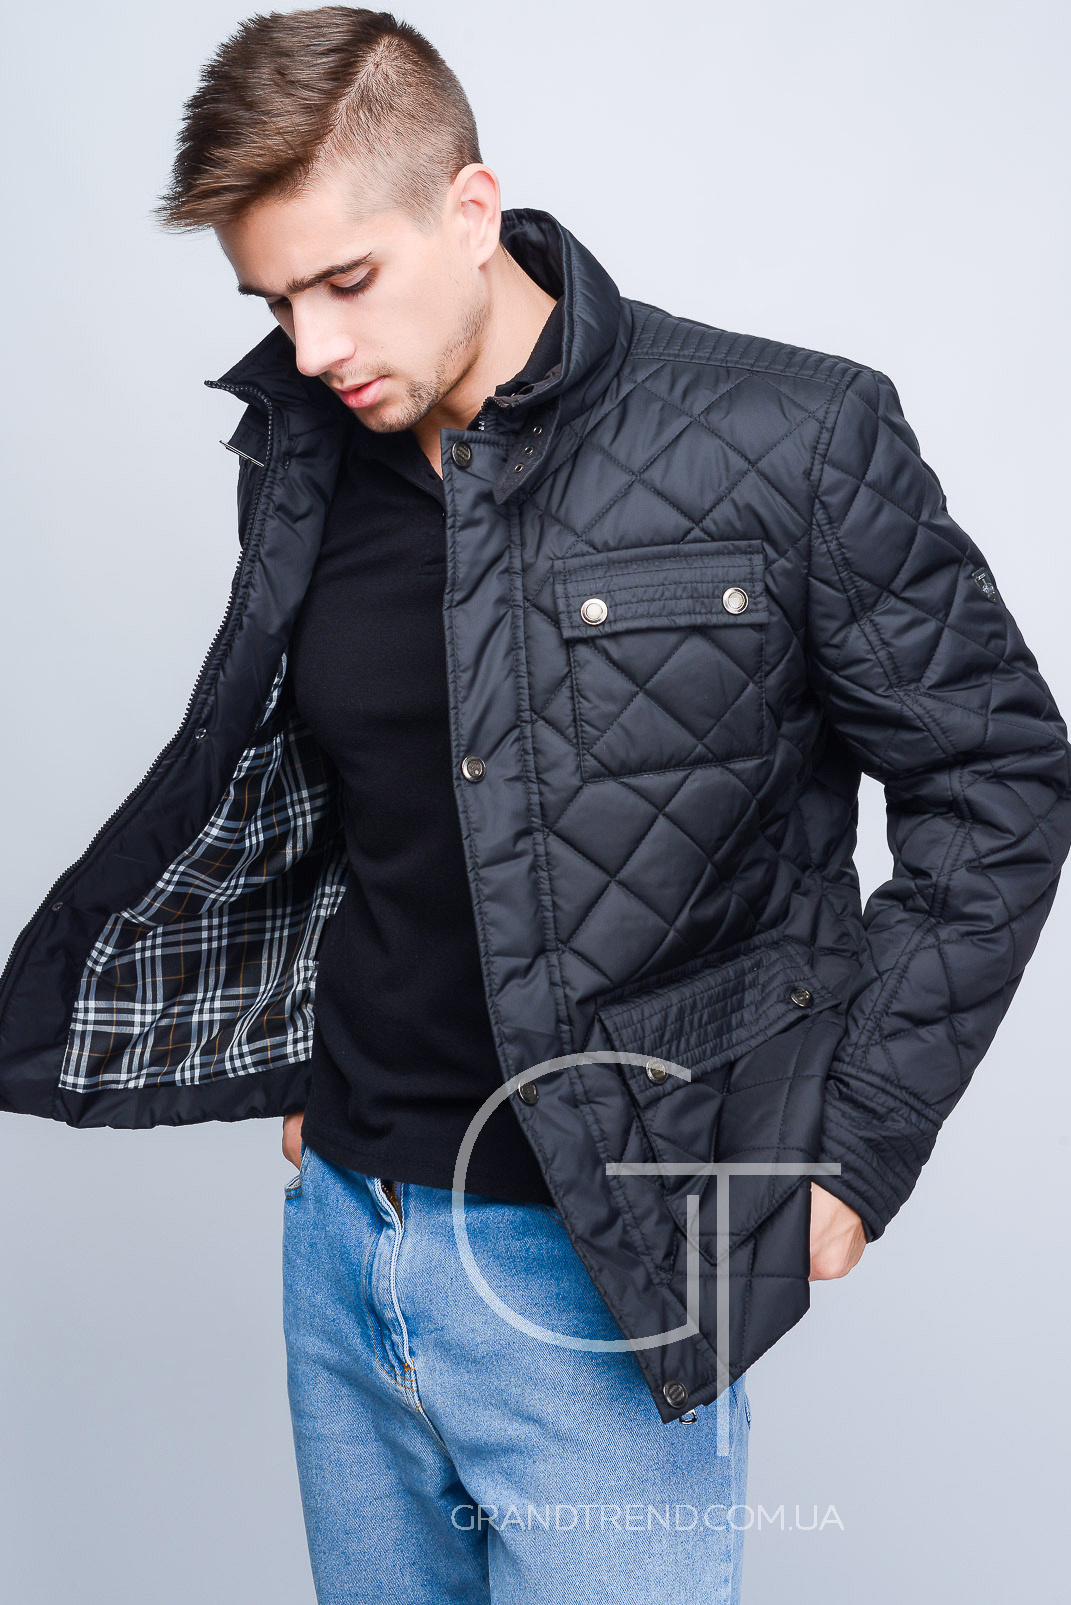 Zaka Fashion Classic куртки мужские 1663